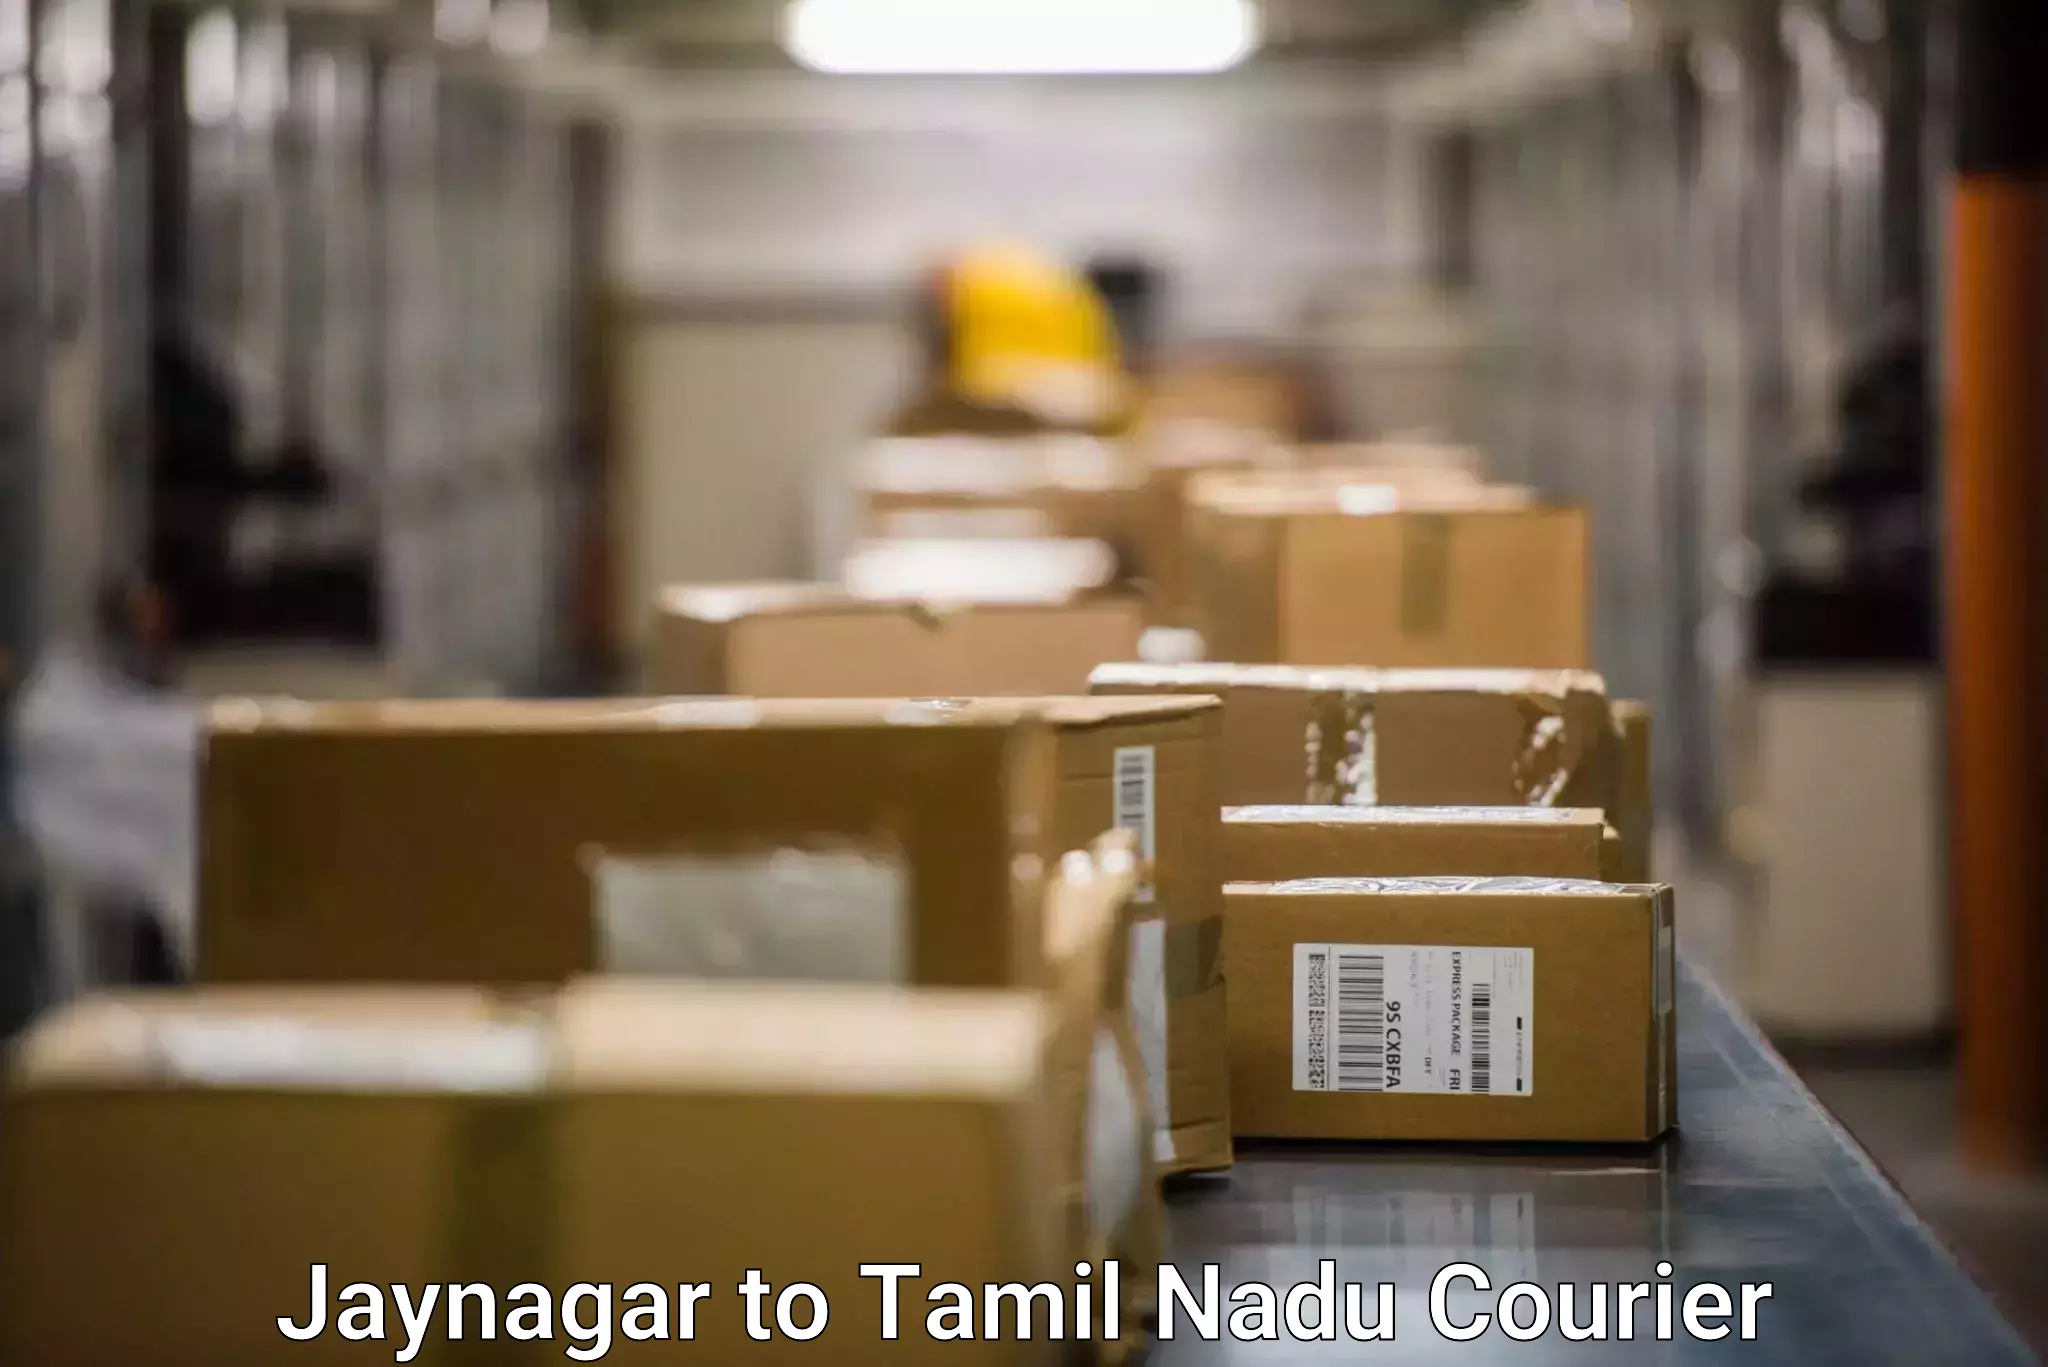 Efficient shipping operations Jaynagar to Hosur